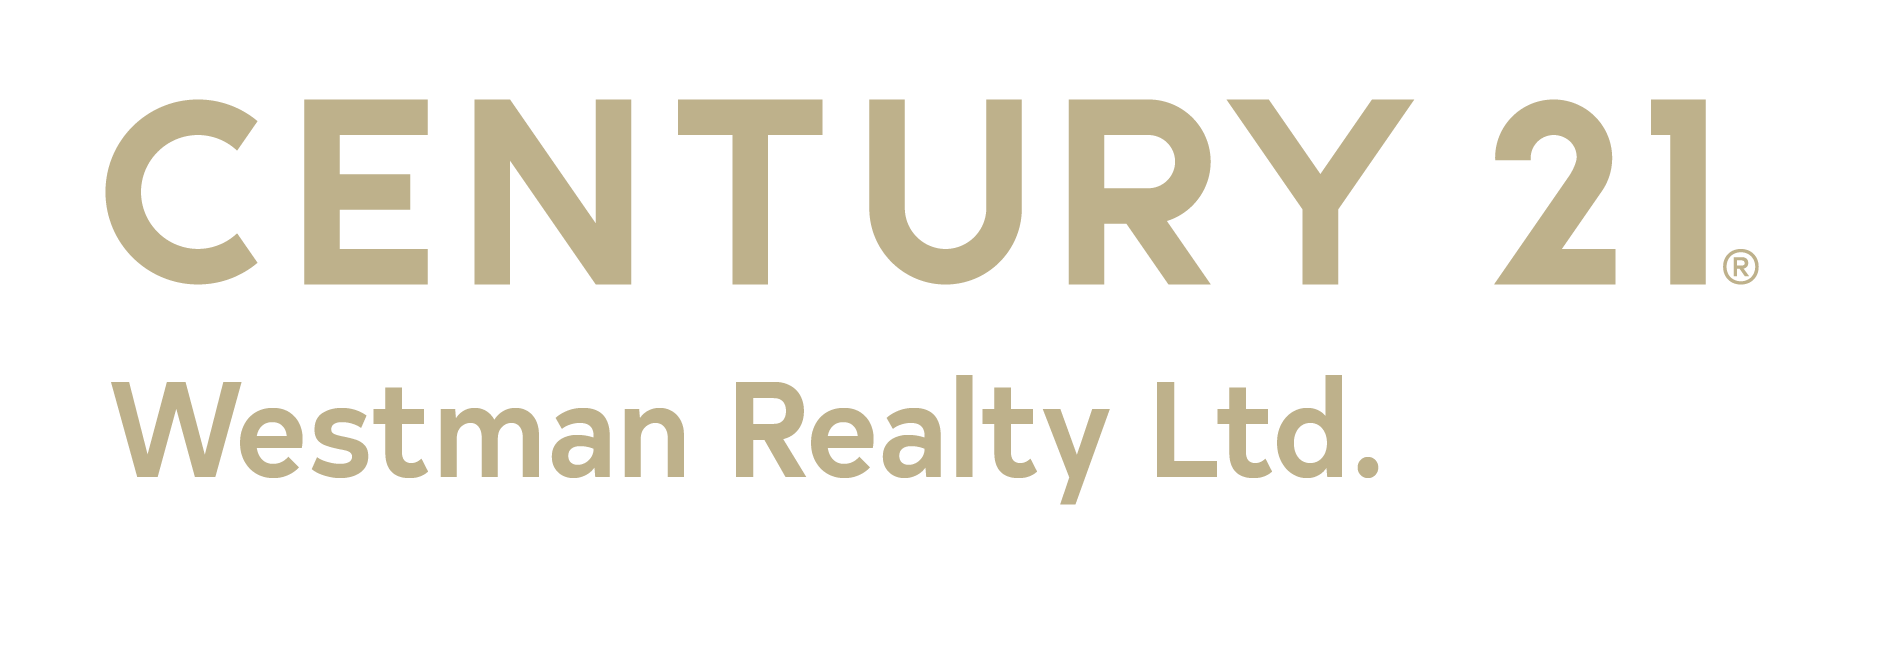 Century 21 Westman Realty Ltd.